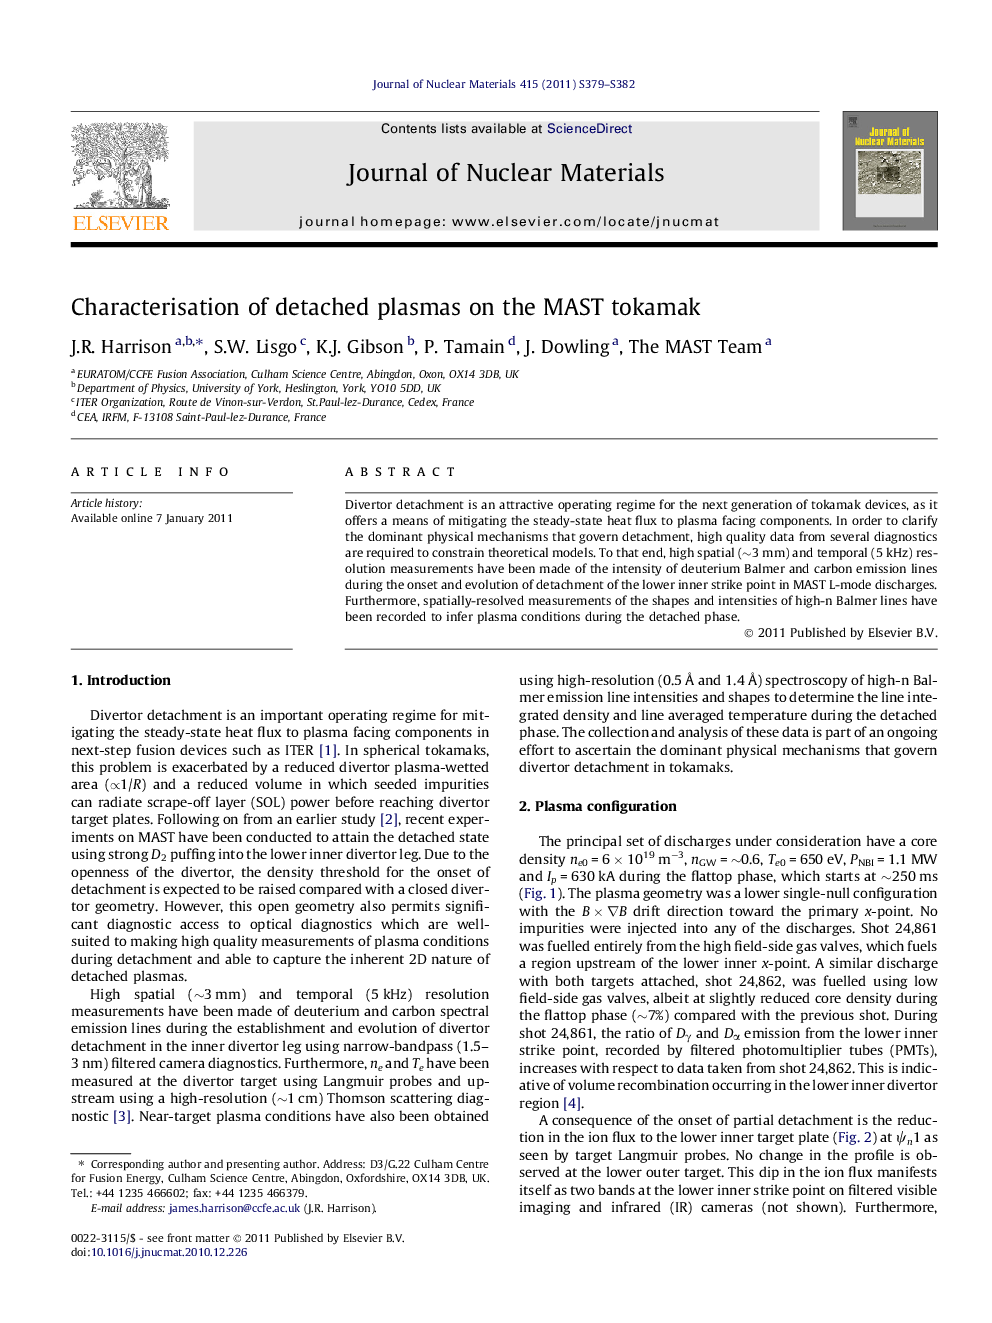 Characterisation of detached plasmas on the MAST tokamak